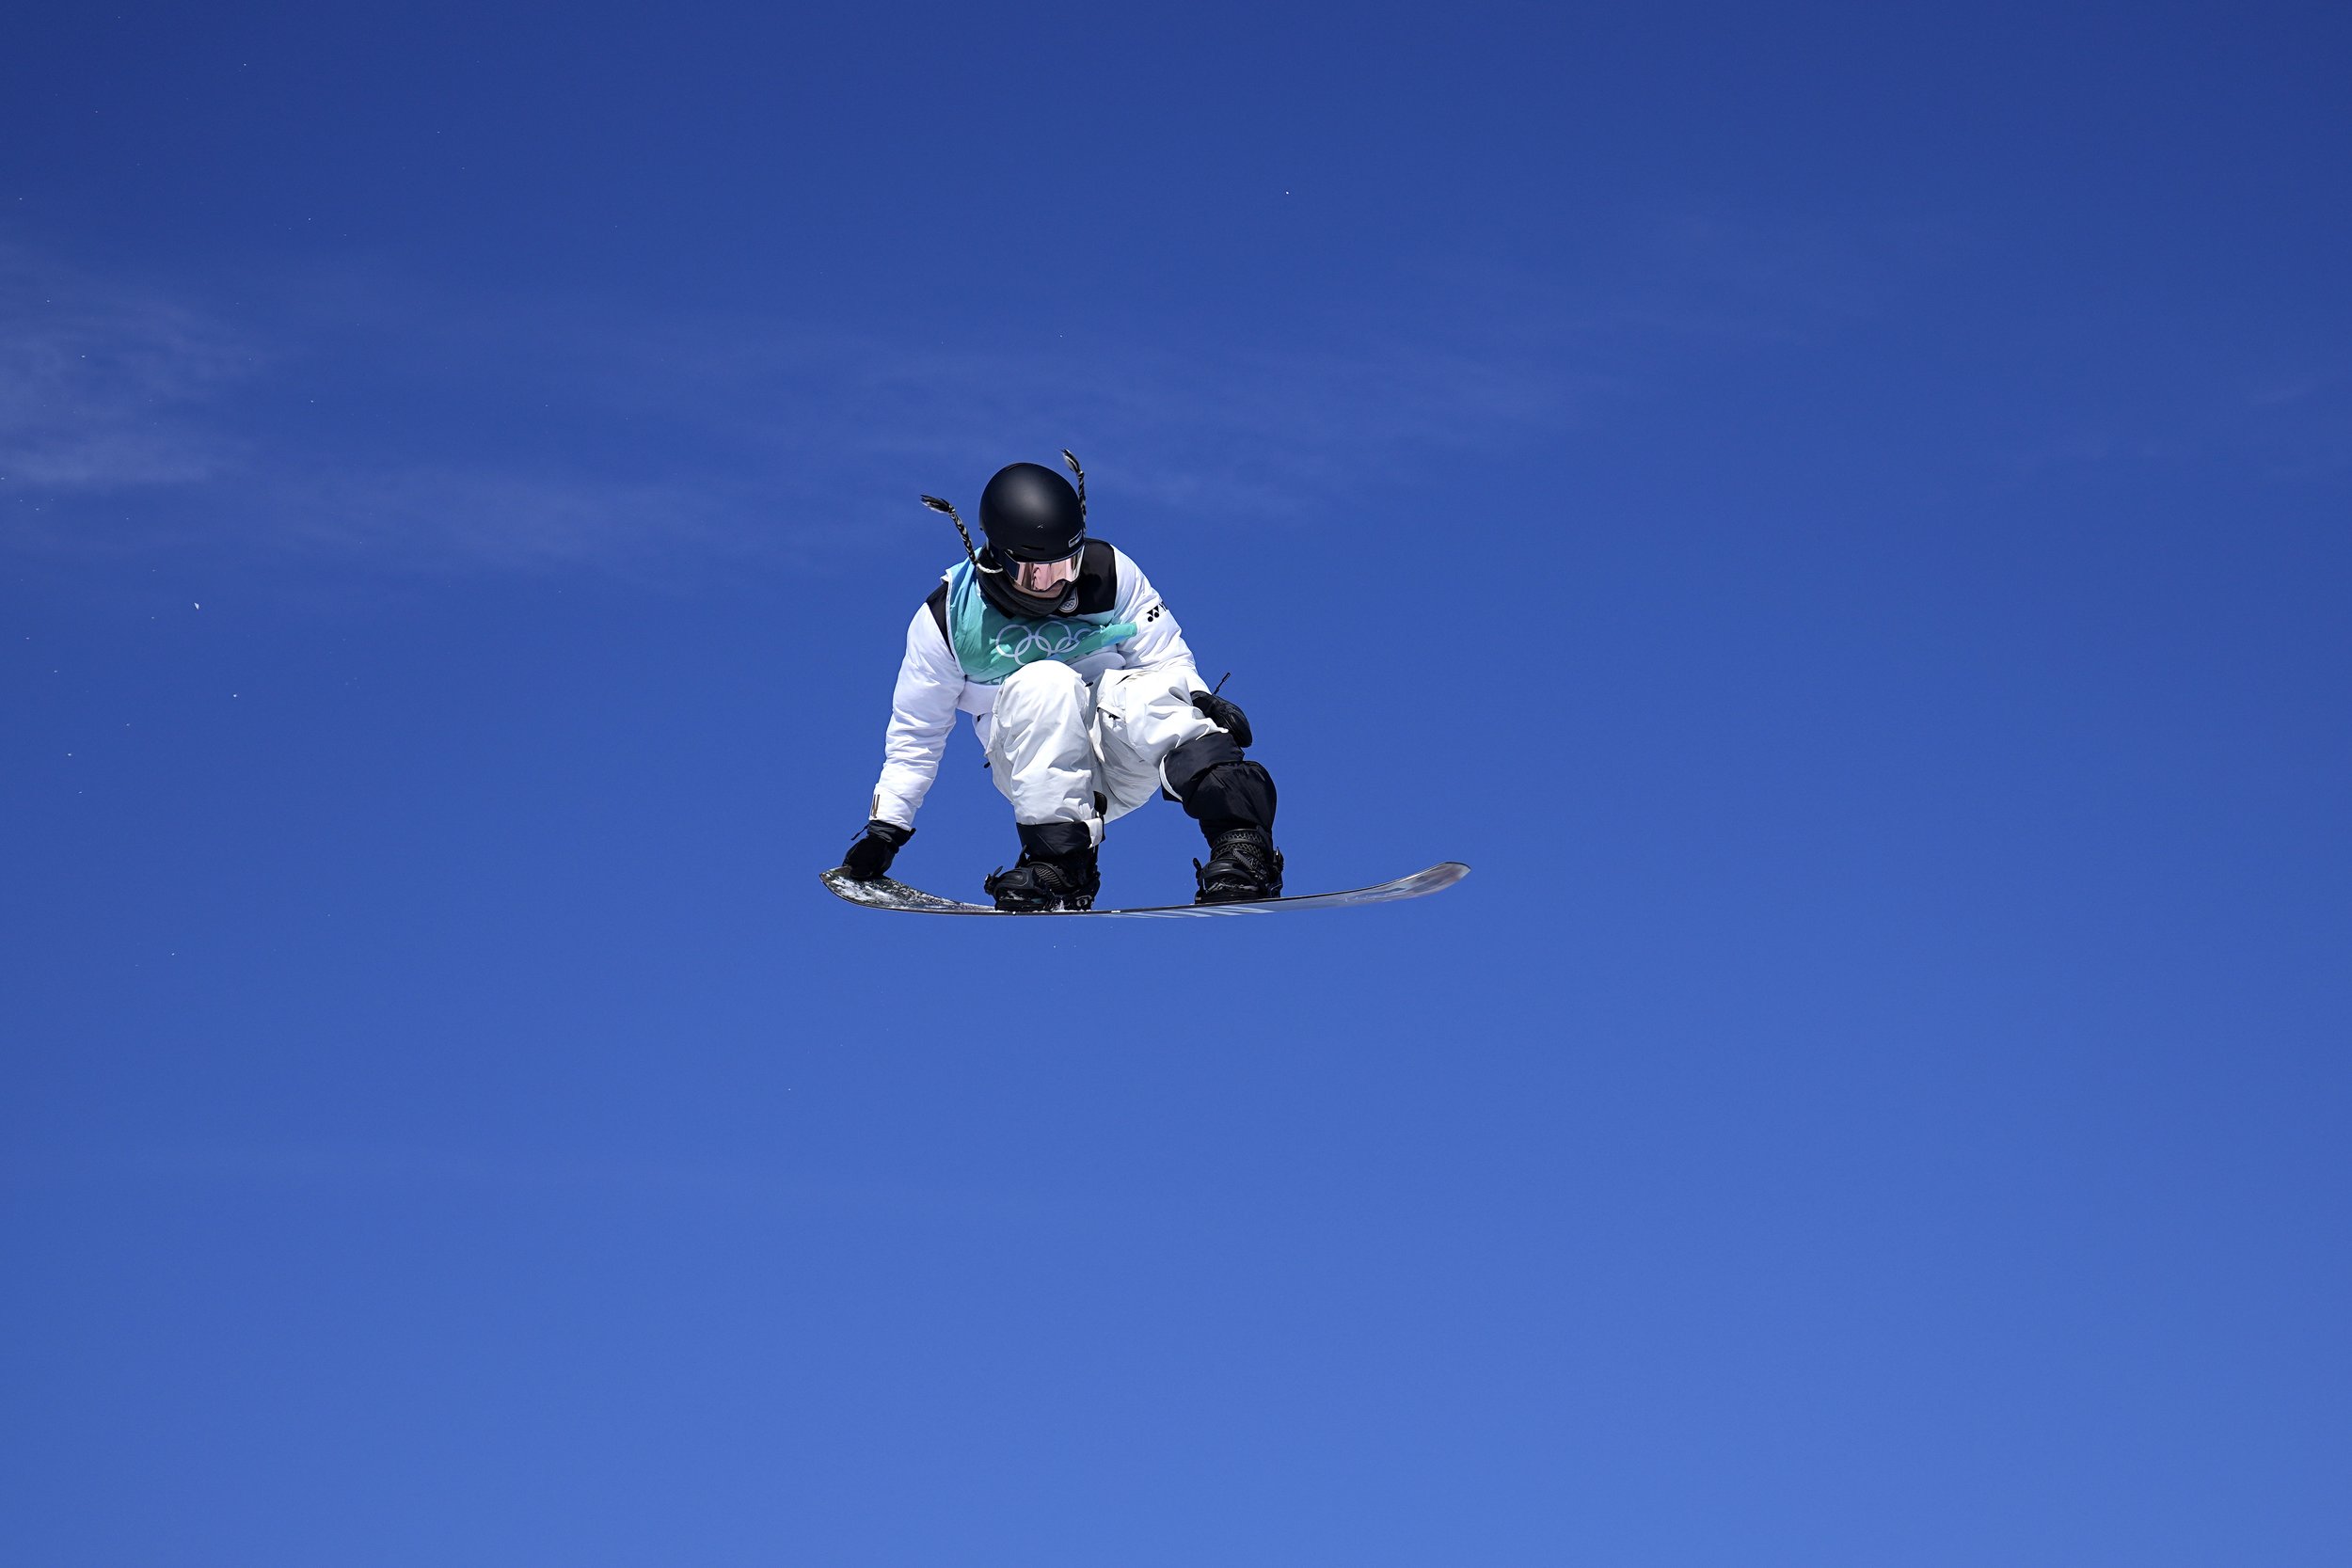  Hiroaki Kunitake of Japan competes during the men's snowboard big air qualifications of the 2022 Winter Olympics, Monday, Feb. 14, 2022, in Beijing. (AP Photo/Jae C. Hong) 